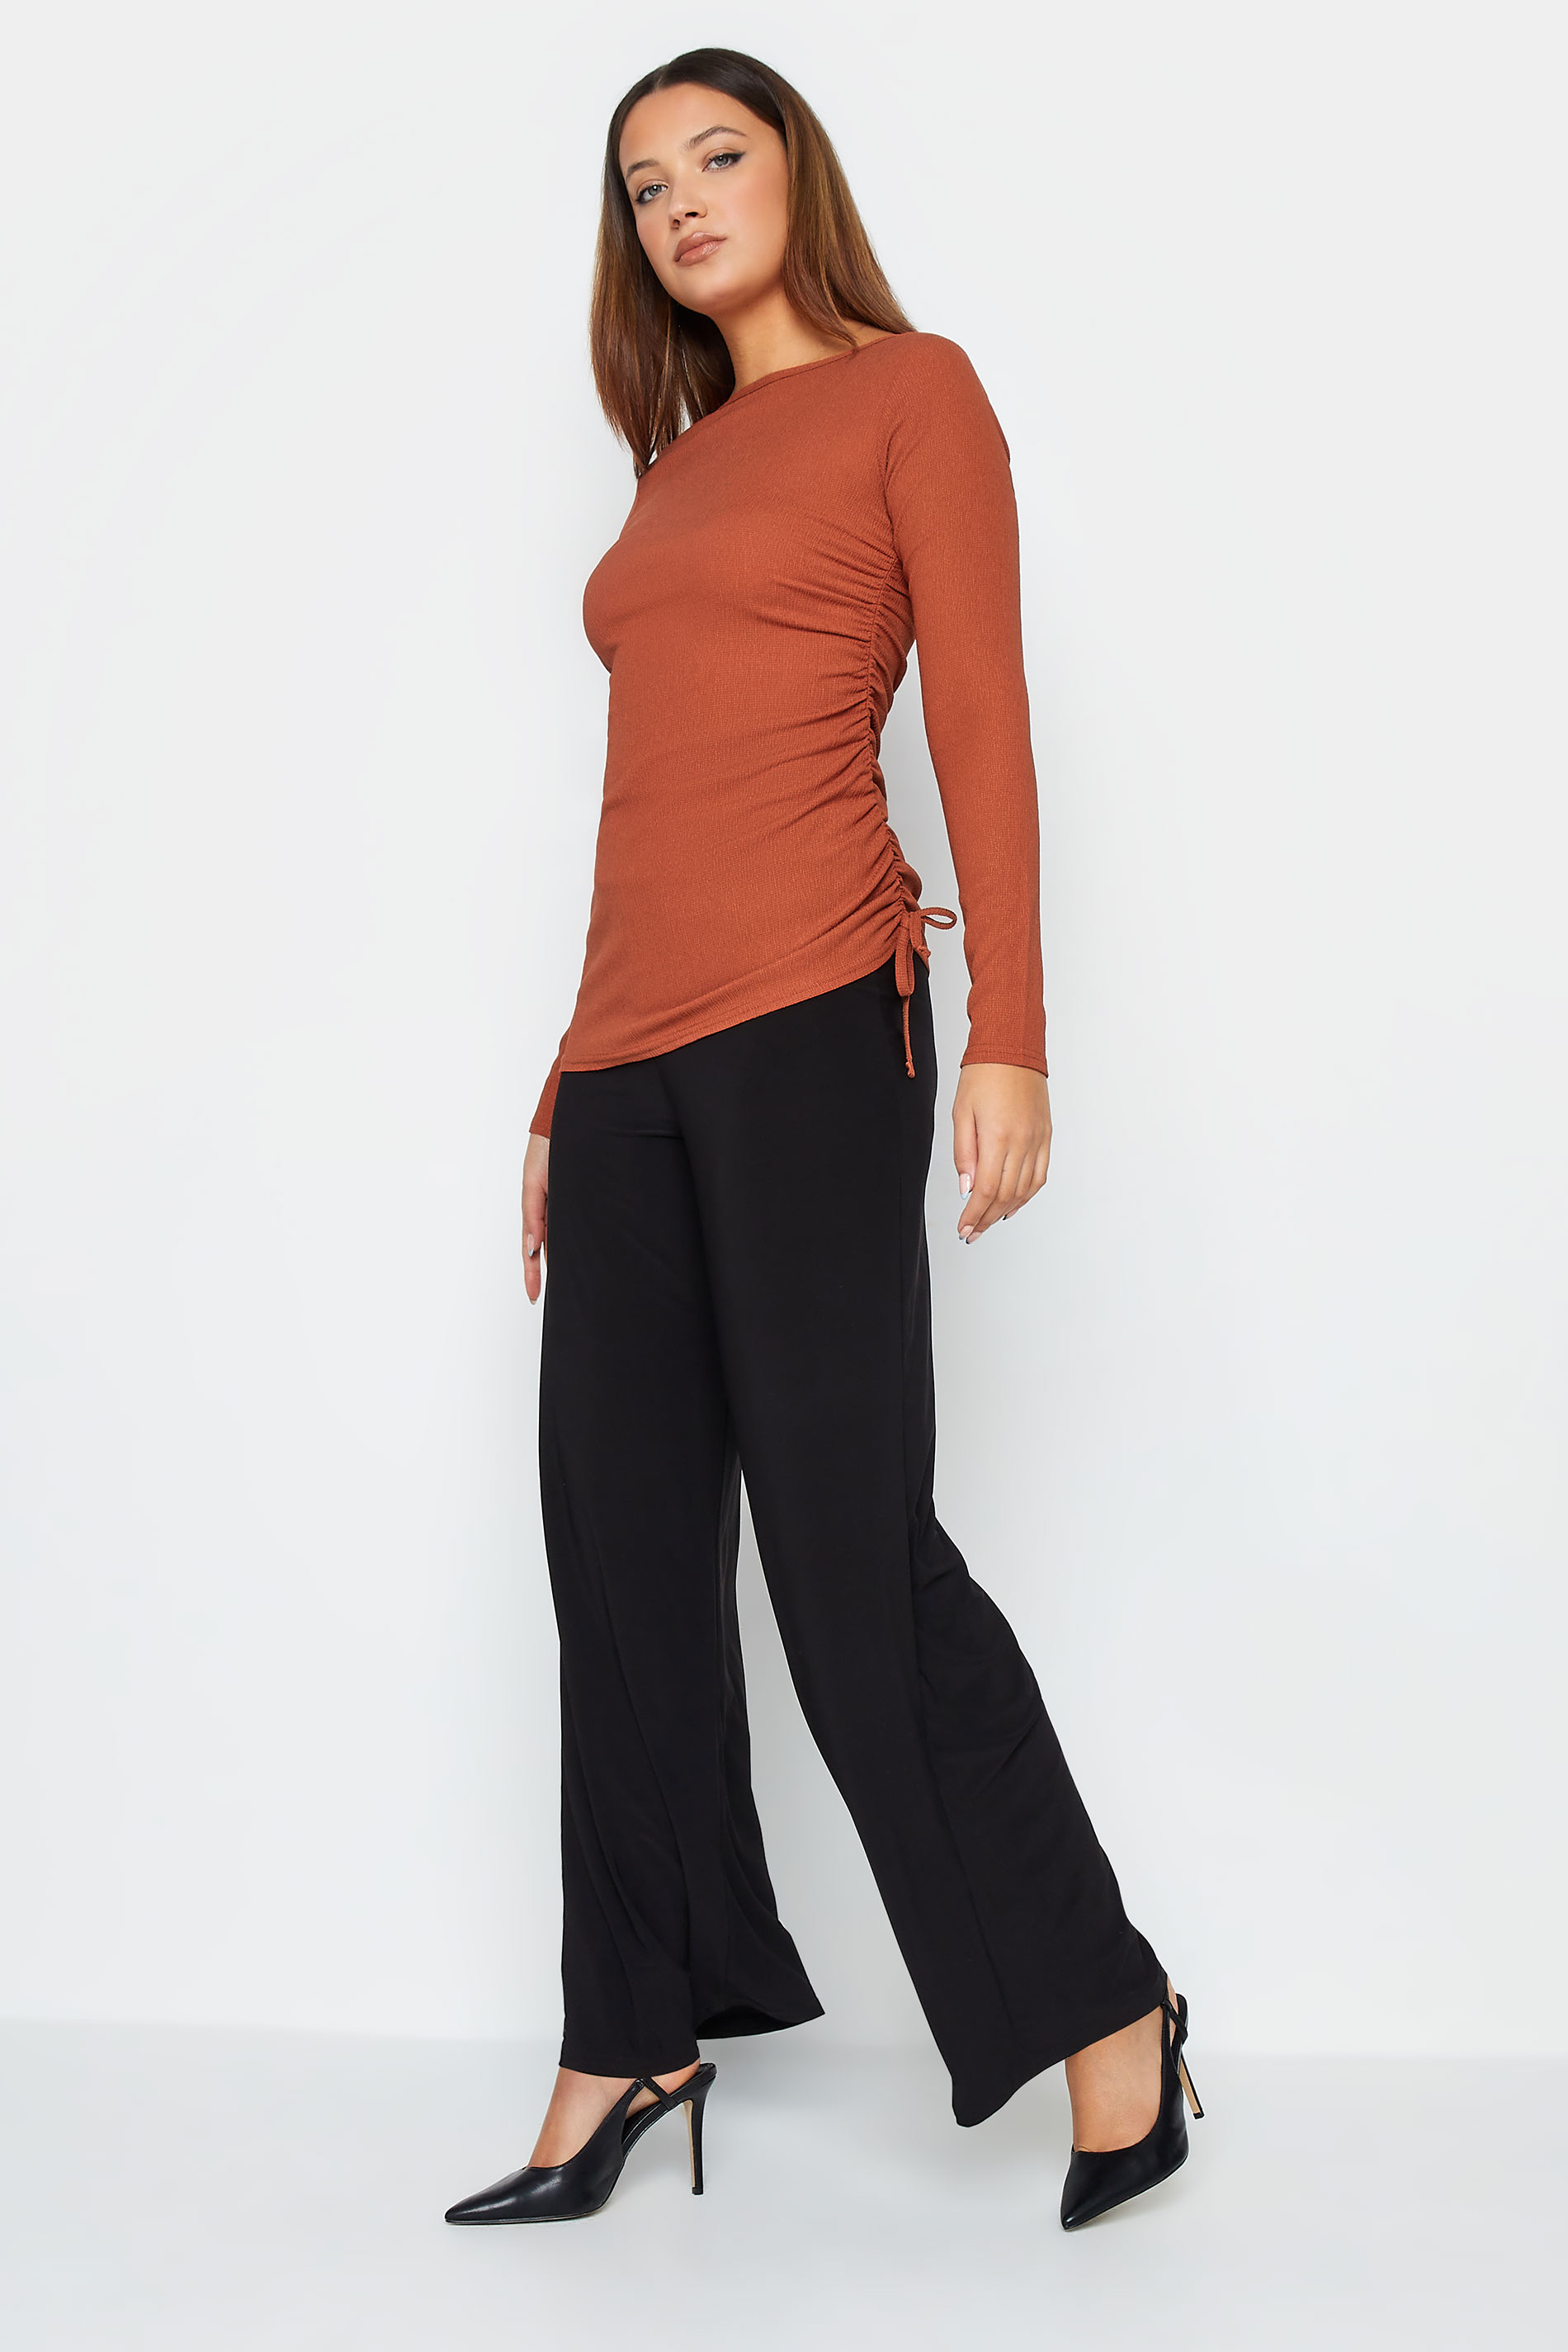 LTS Tall Dark Orange Ruched Long Sleeve Top | Long Tall Sally  2